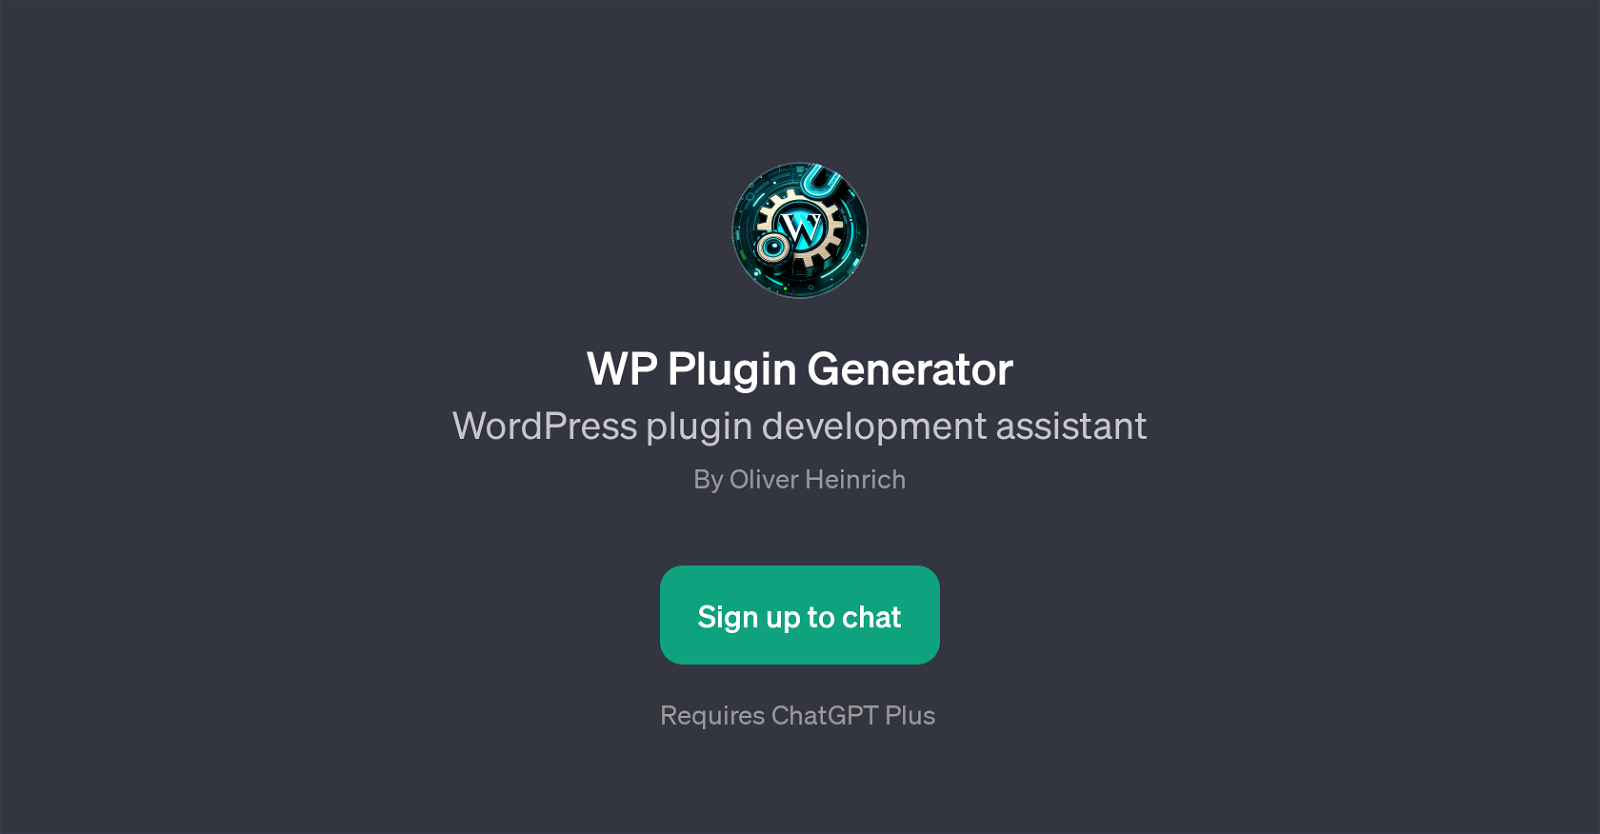 WP Plugin Generator website